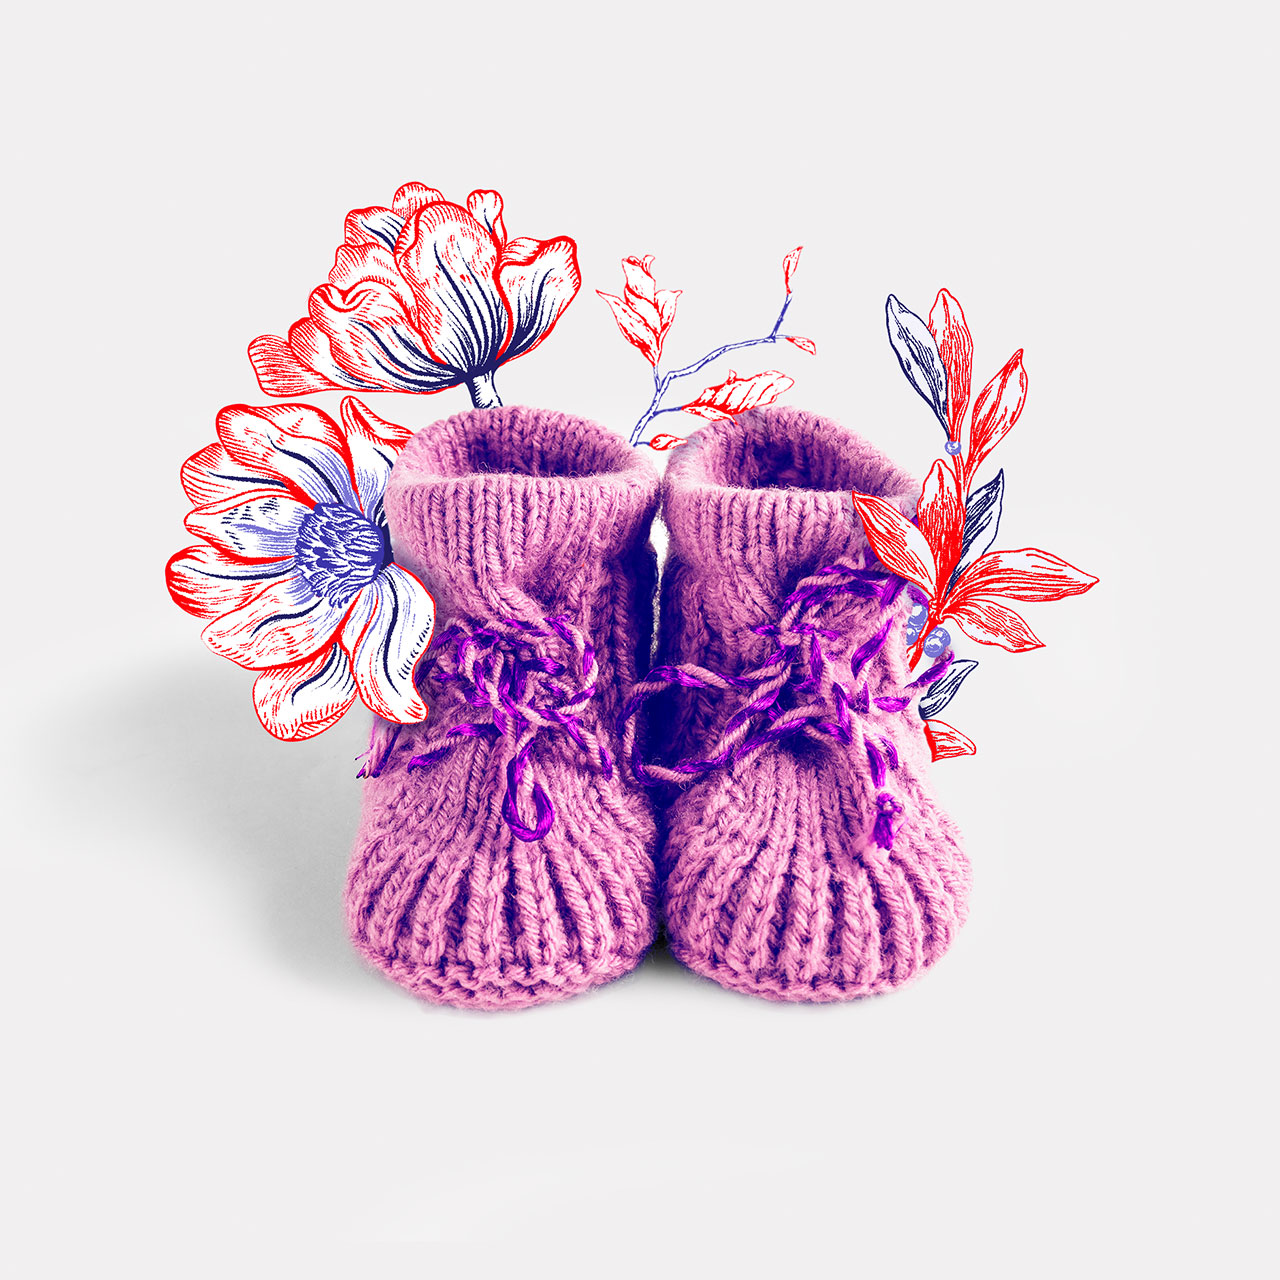 Premier baby shoes; image used for HSBC Premier Cash Credit Promotion page